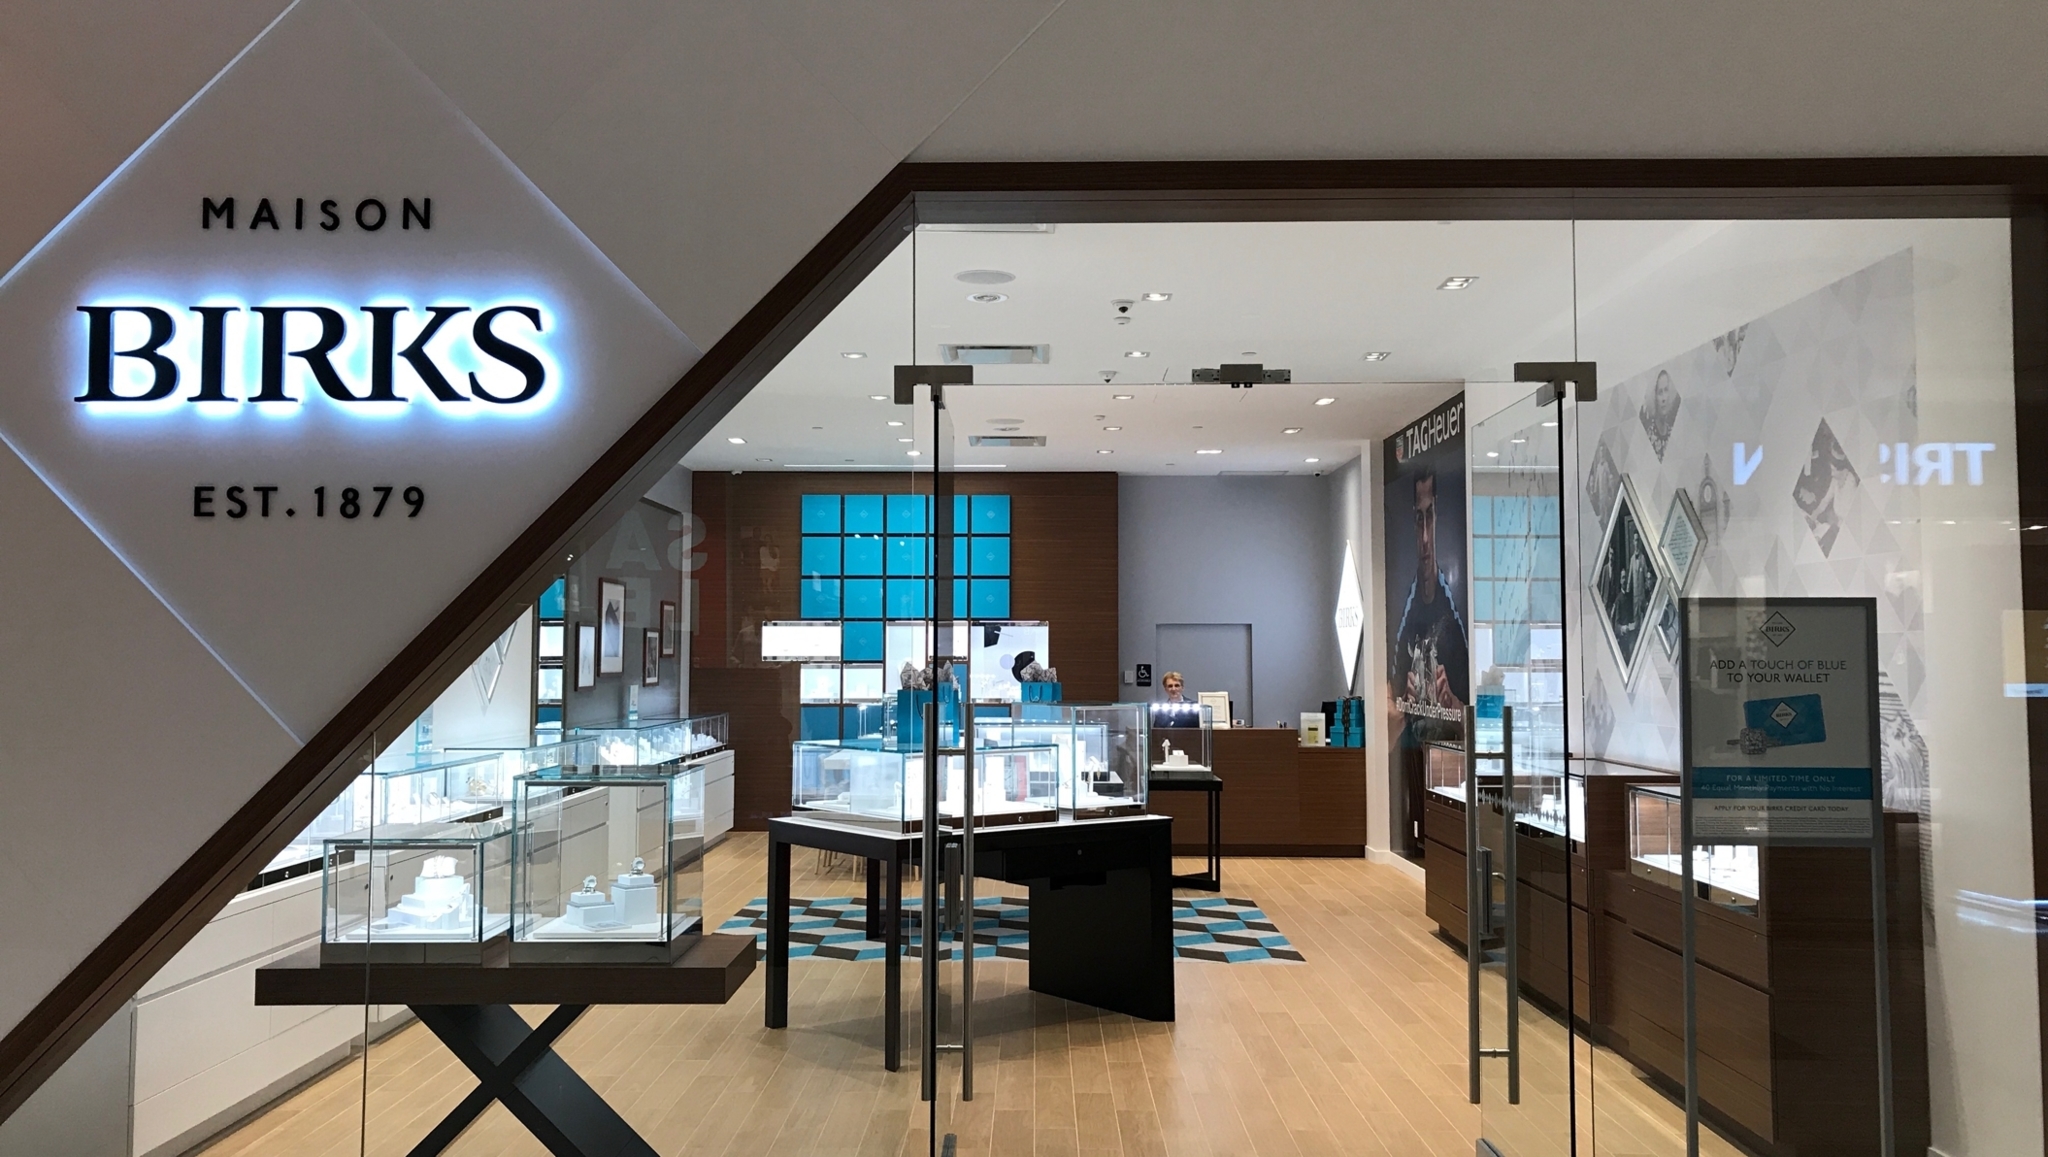 Maison Birks - Jewellers & Jewellery Stores